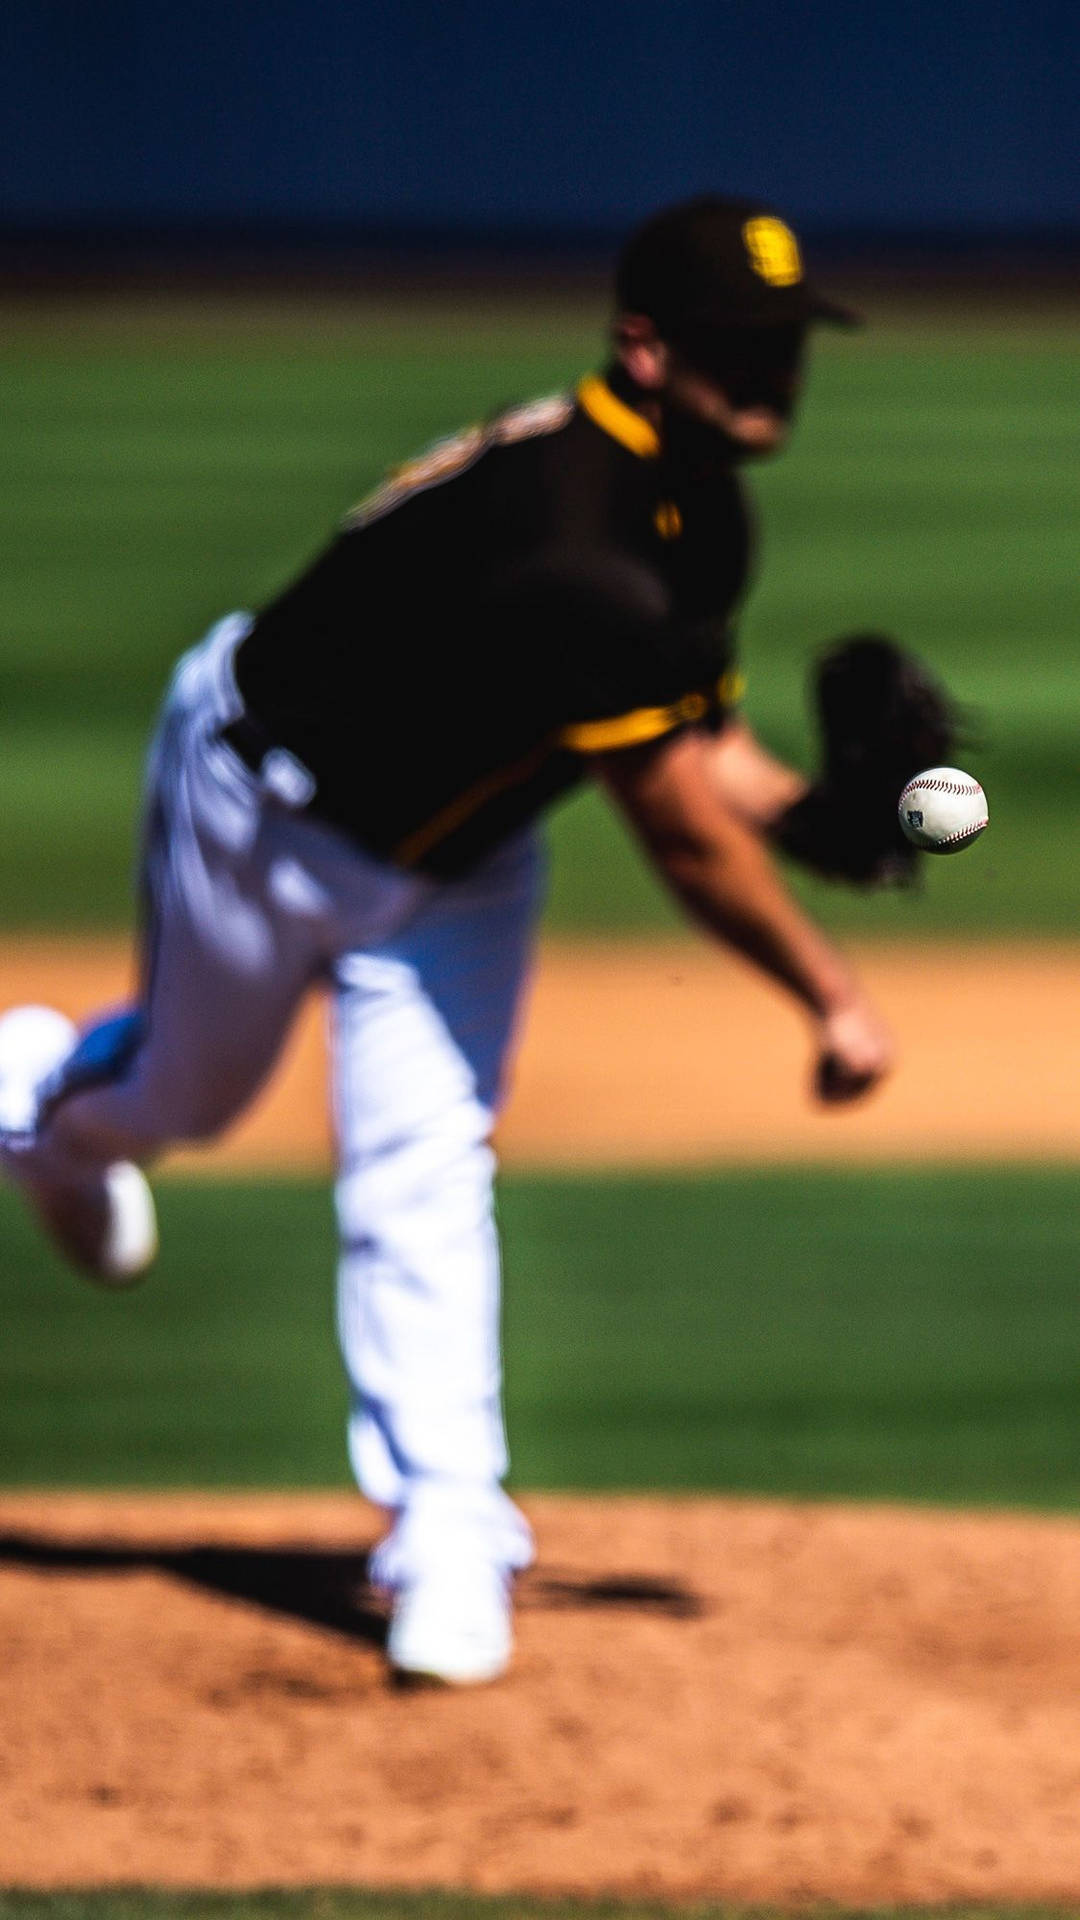 Fernando Tatis Jr. Action Shot During A Baseball Game Background